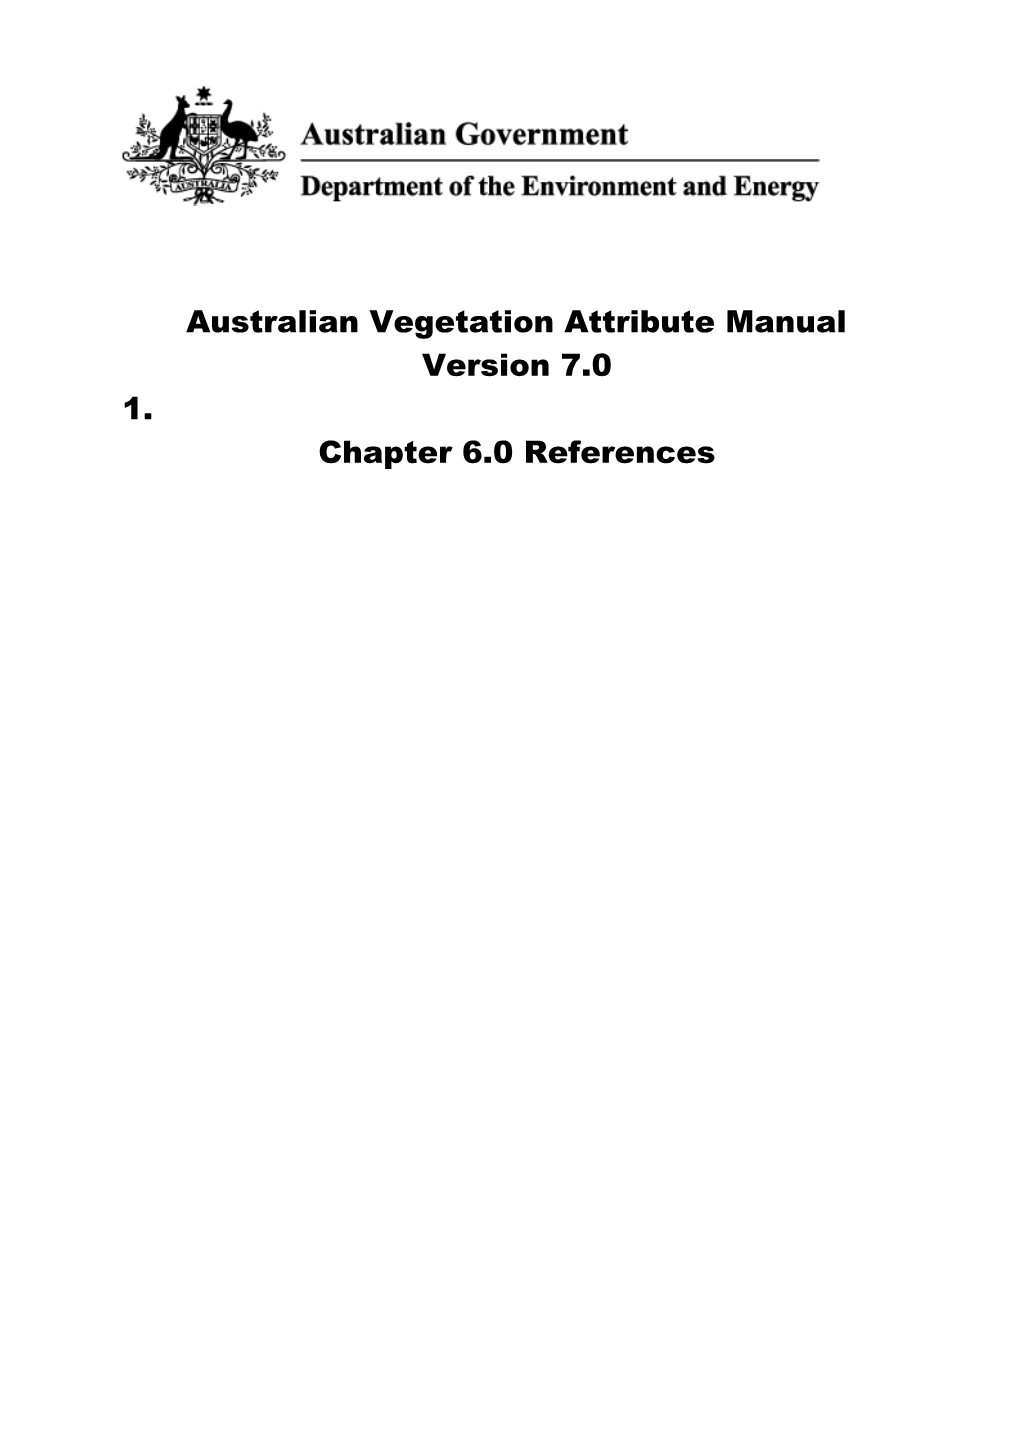 Australian Vegetation Attribute Manual V 7.0 Chapter 6.0 References